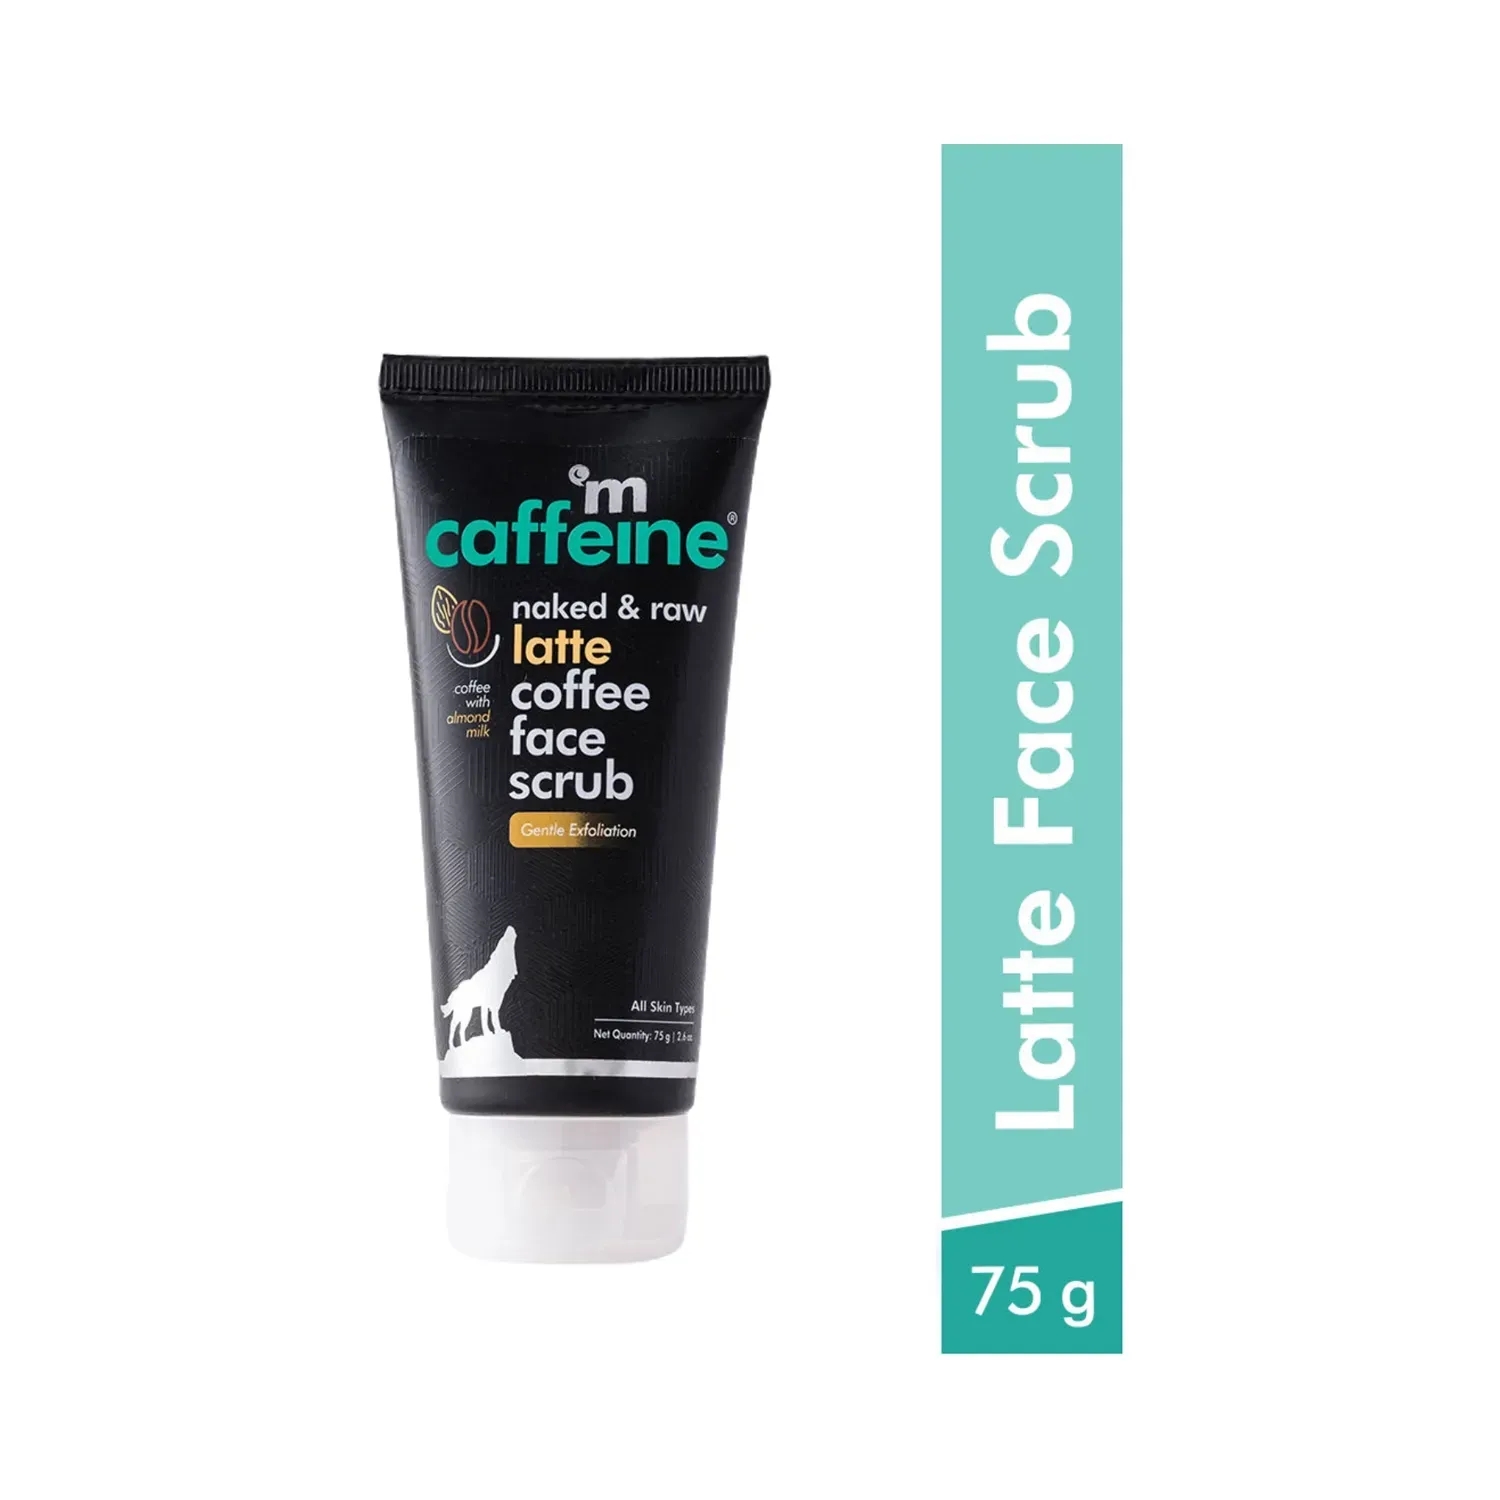 mCaffeine | mCaffeine Naked & Raw Latte Coffee Gentle Exfoliating Face Scrub for Moisture Retention with Shea Butter - (75g)